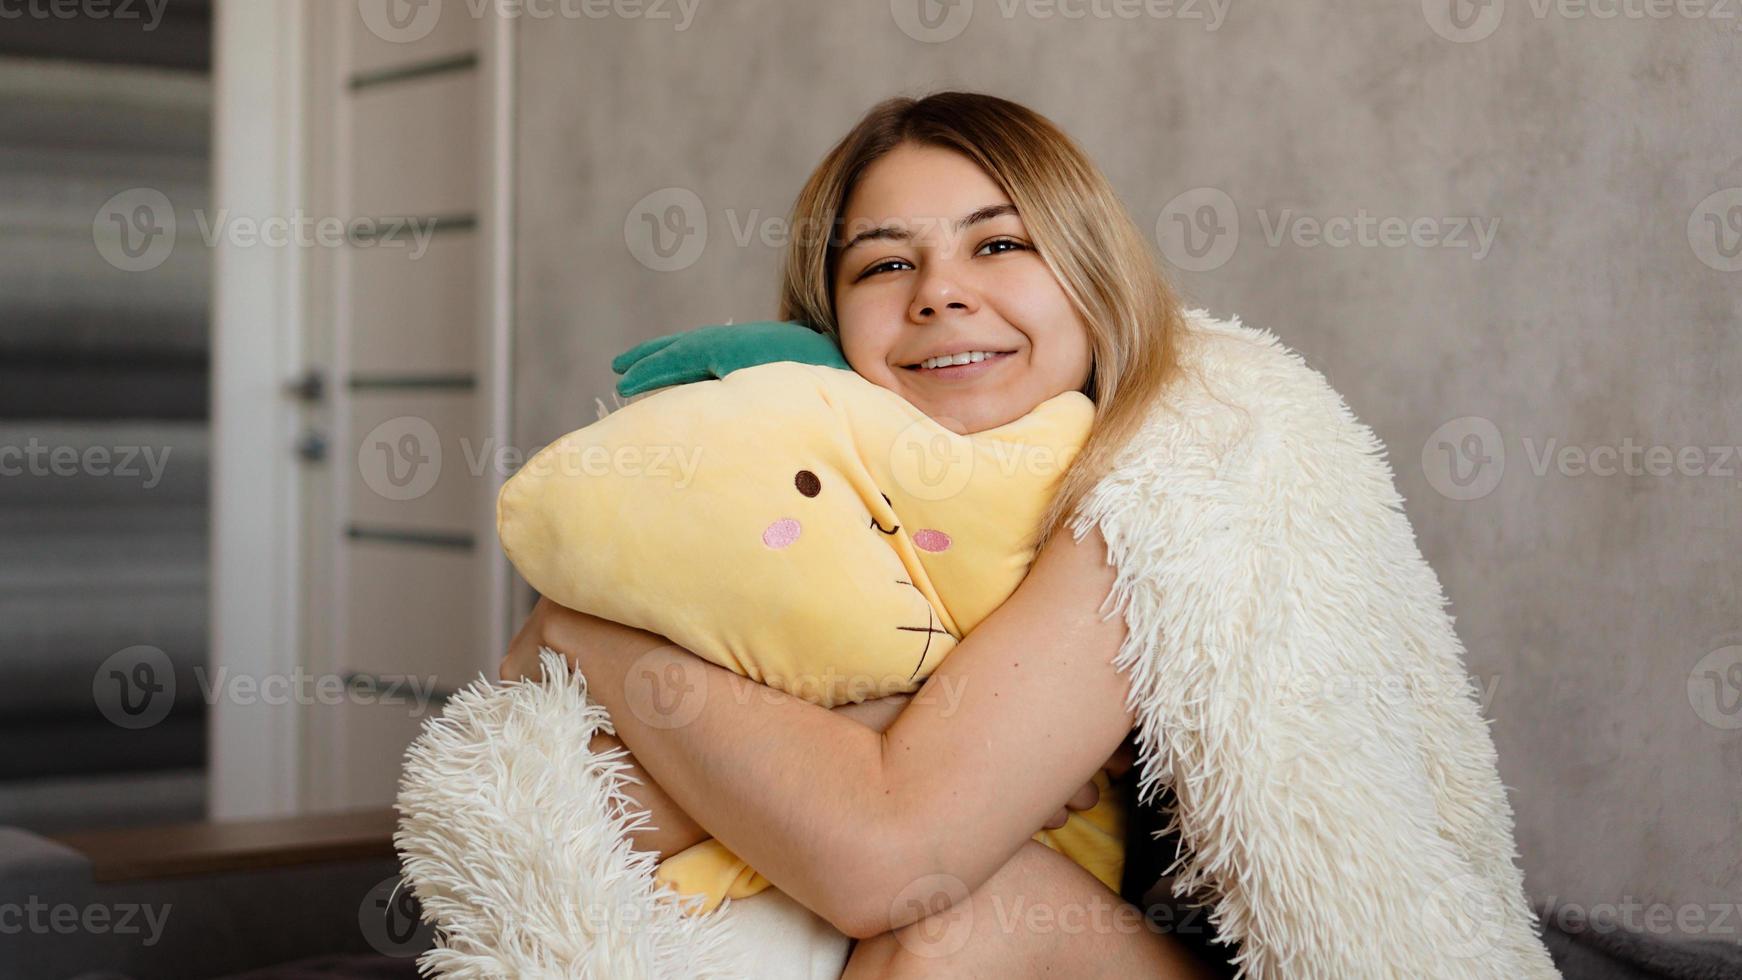 glad blondin på morgonen kramar en gul kudde. morgon koncept foto